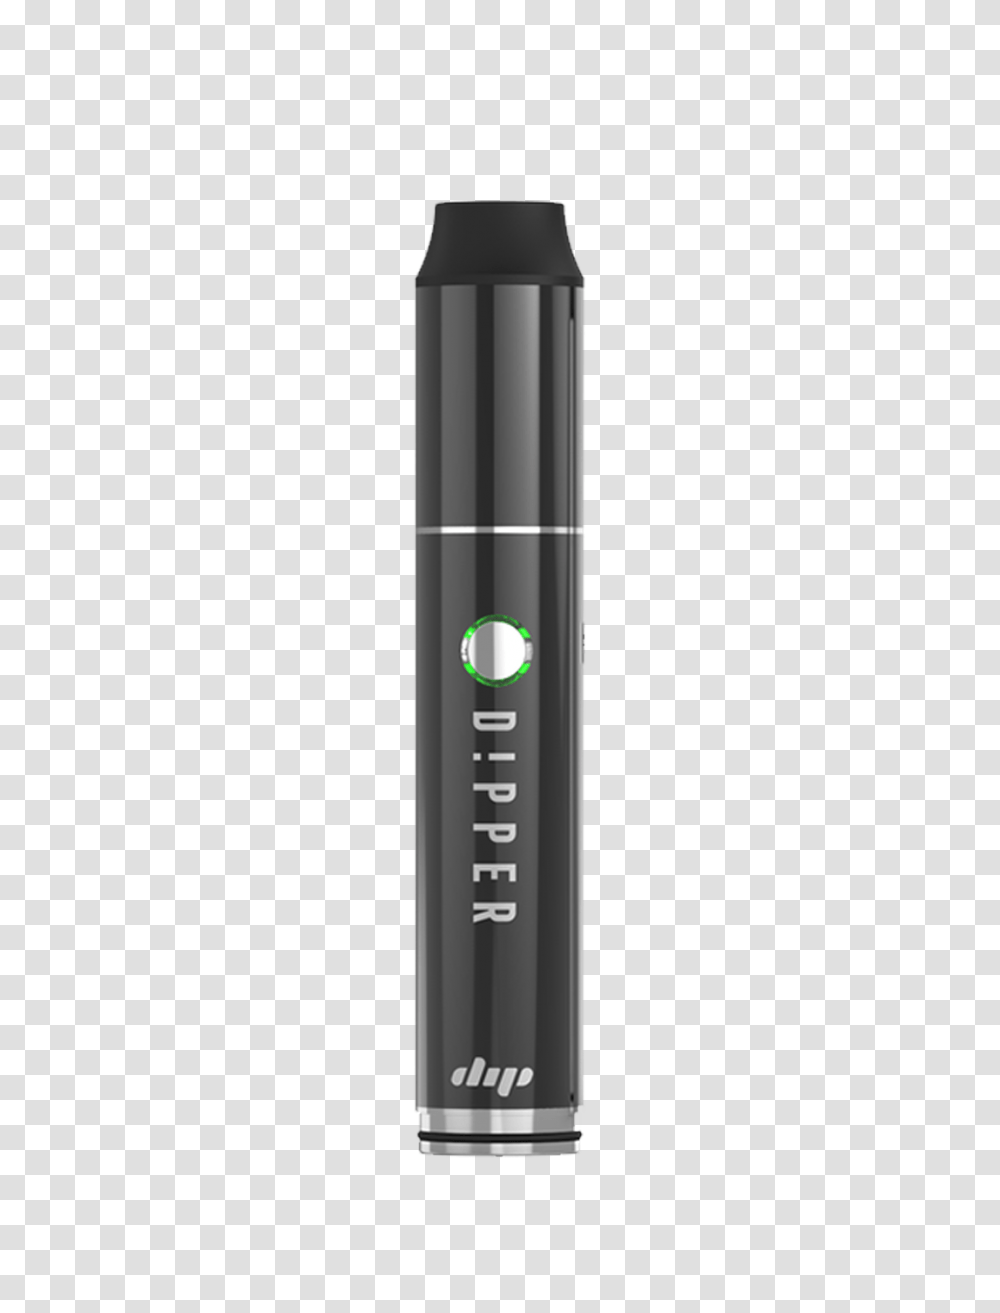 The Dipper Dipstick Vaporizer Reviews Rating Vaporizers Comparison, Modem, Hardware, Electronics, Shaker Transparent Png